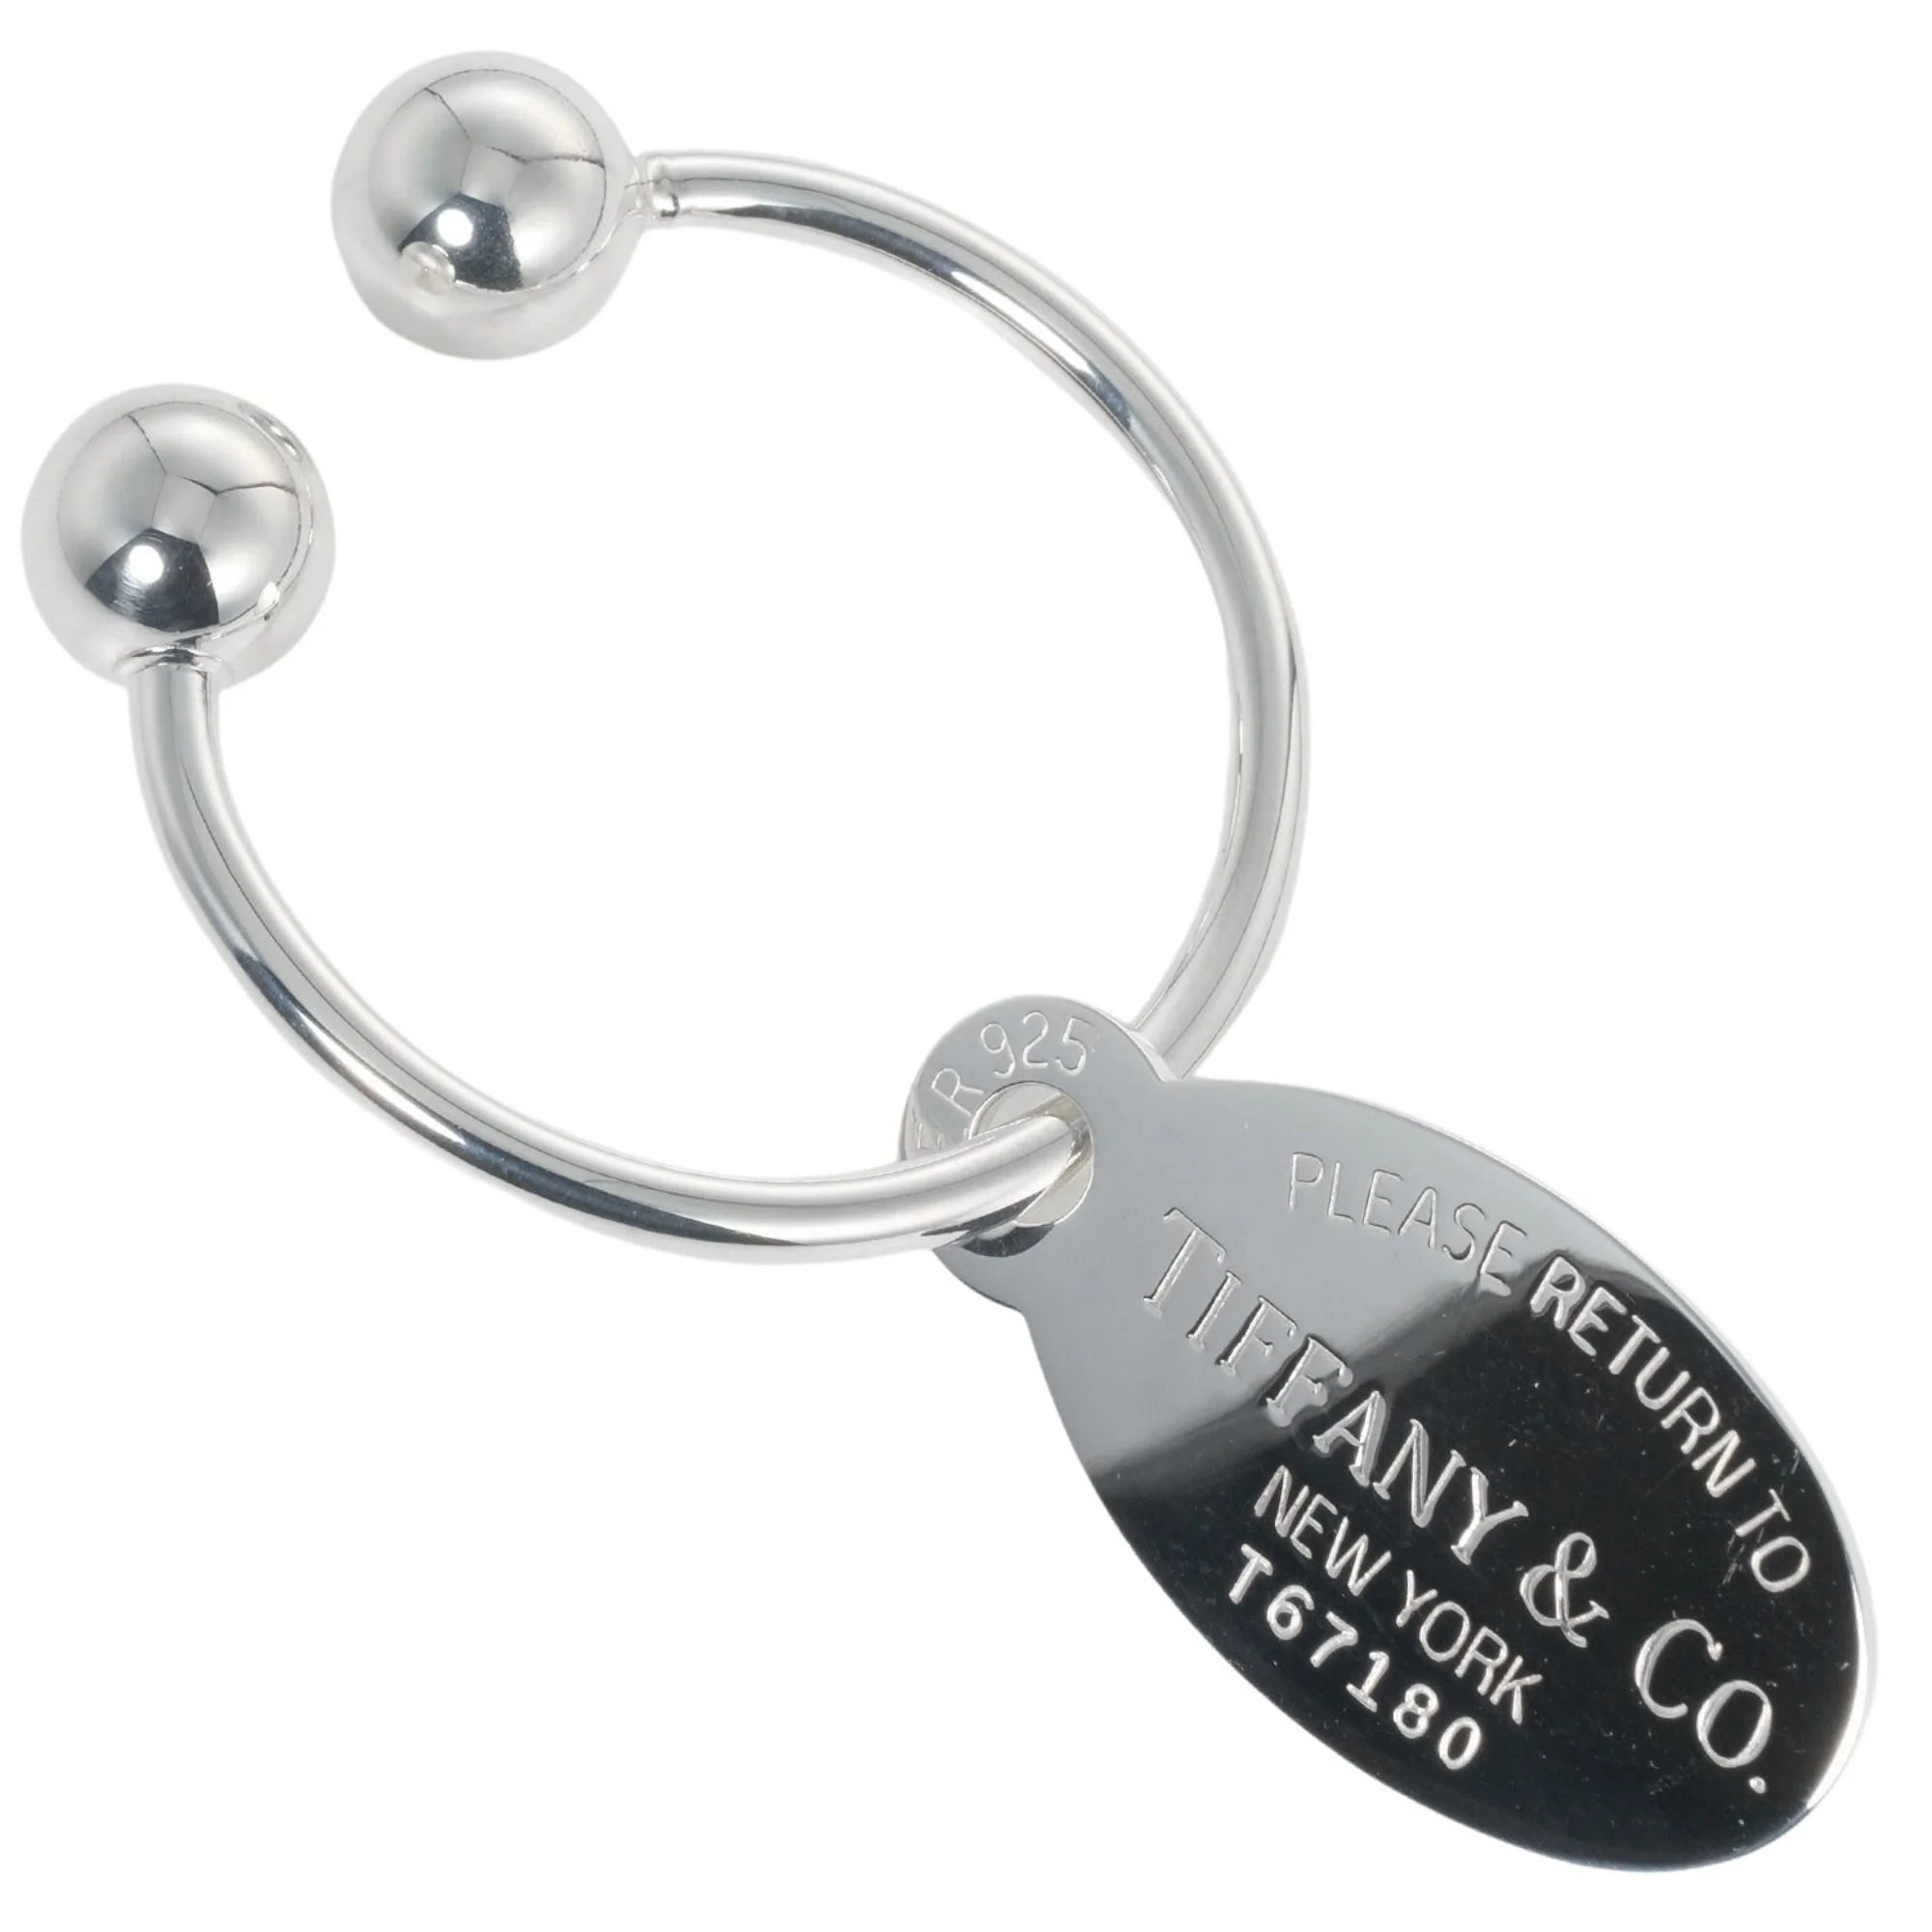 Women Tiffany & Co Key ring Bag - Silver $1729